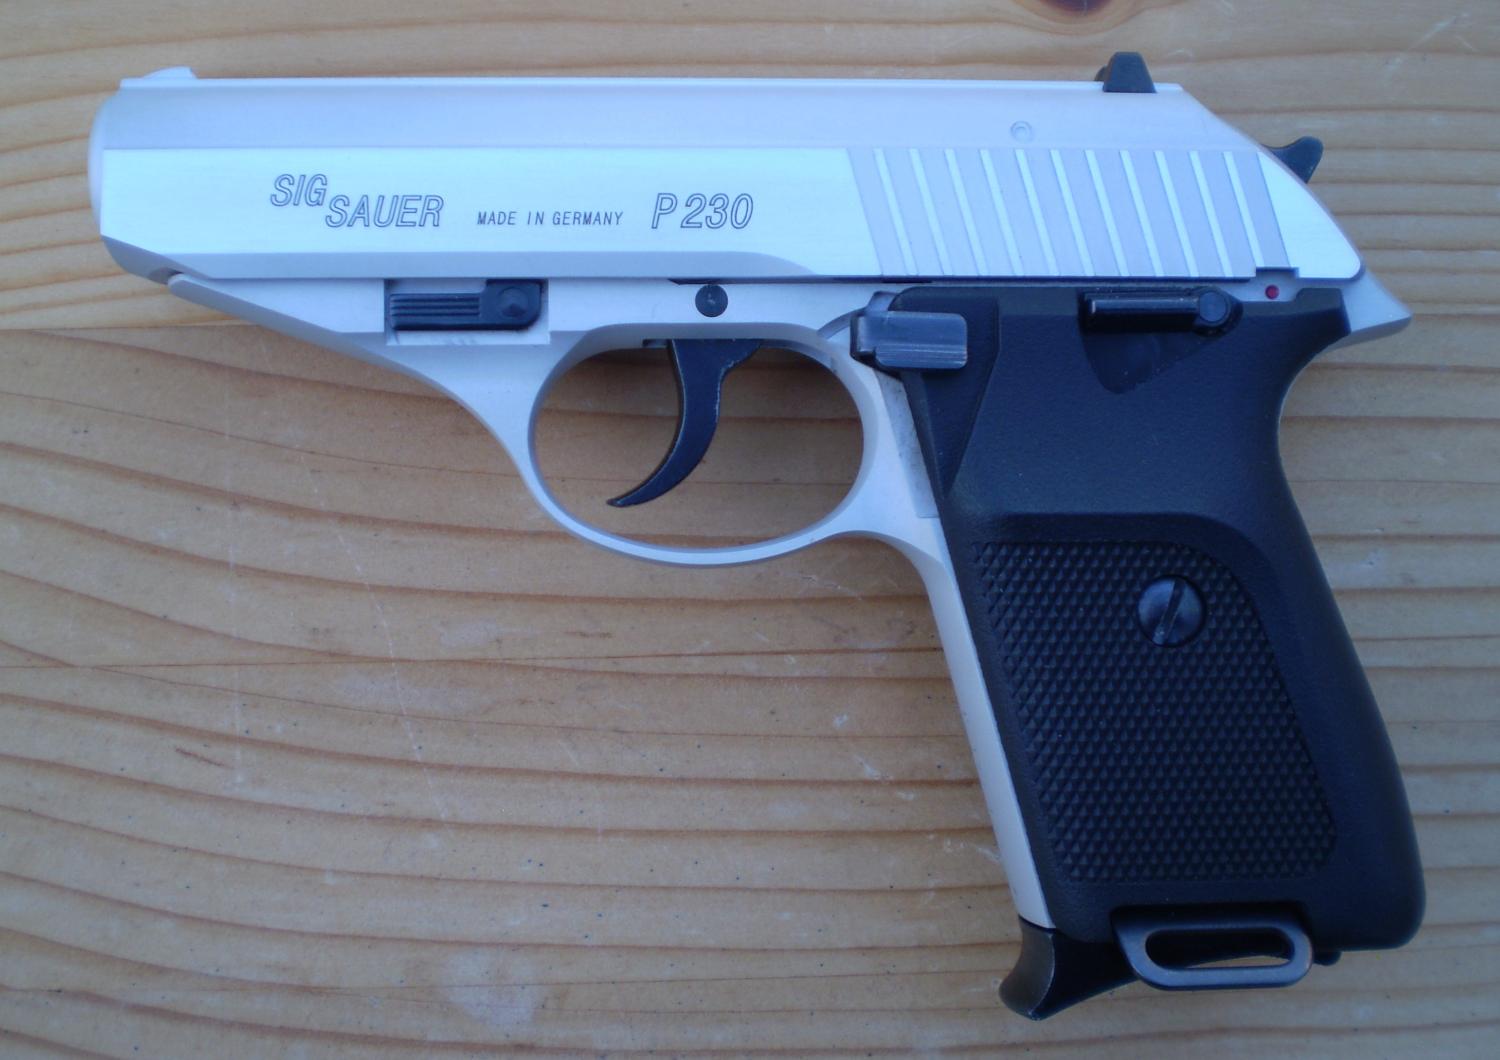 KSC Sig Sauer P230 Full metal upgrade GBB 6mm pistol. - Gas 